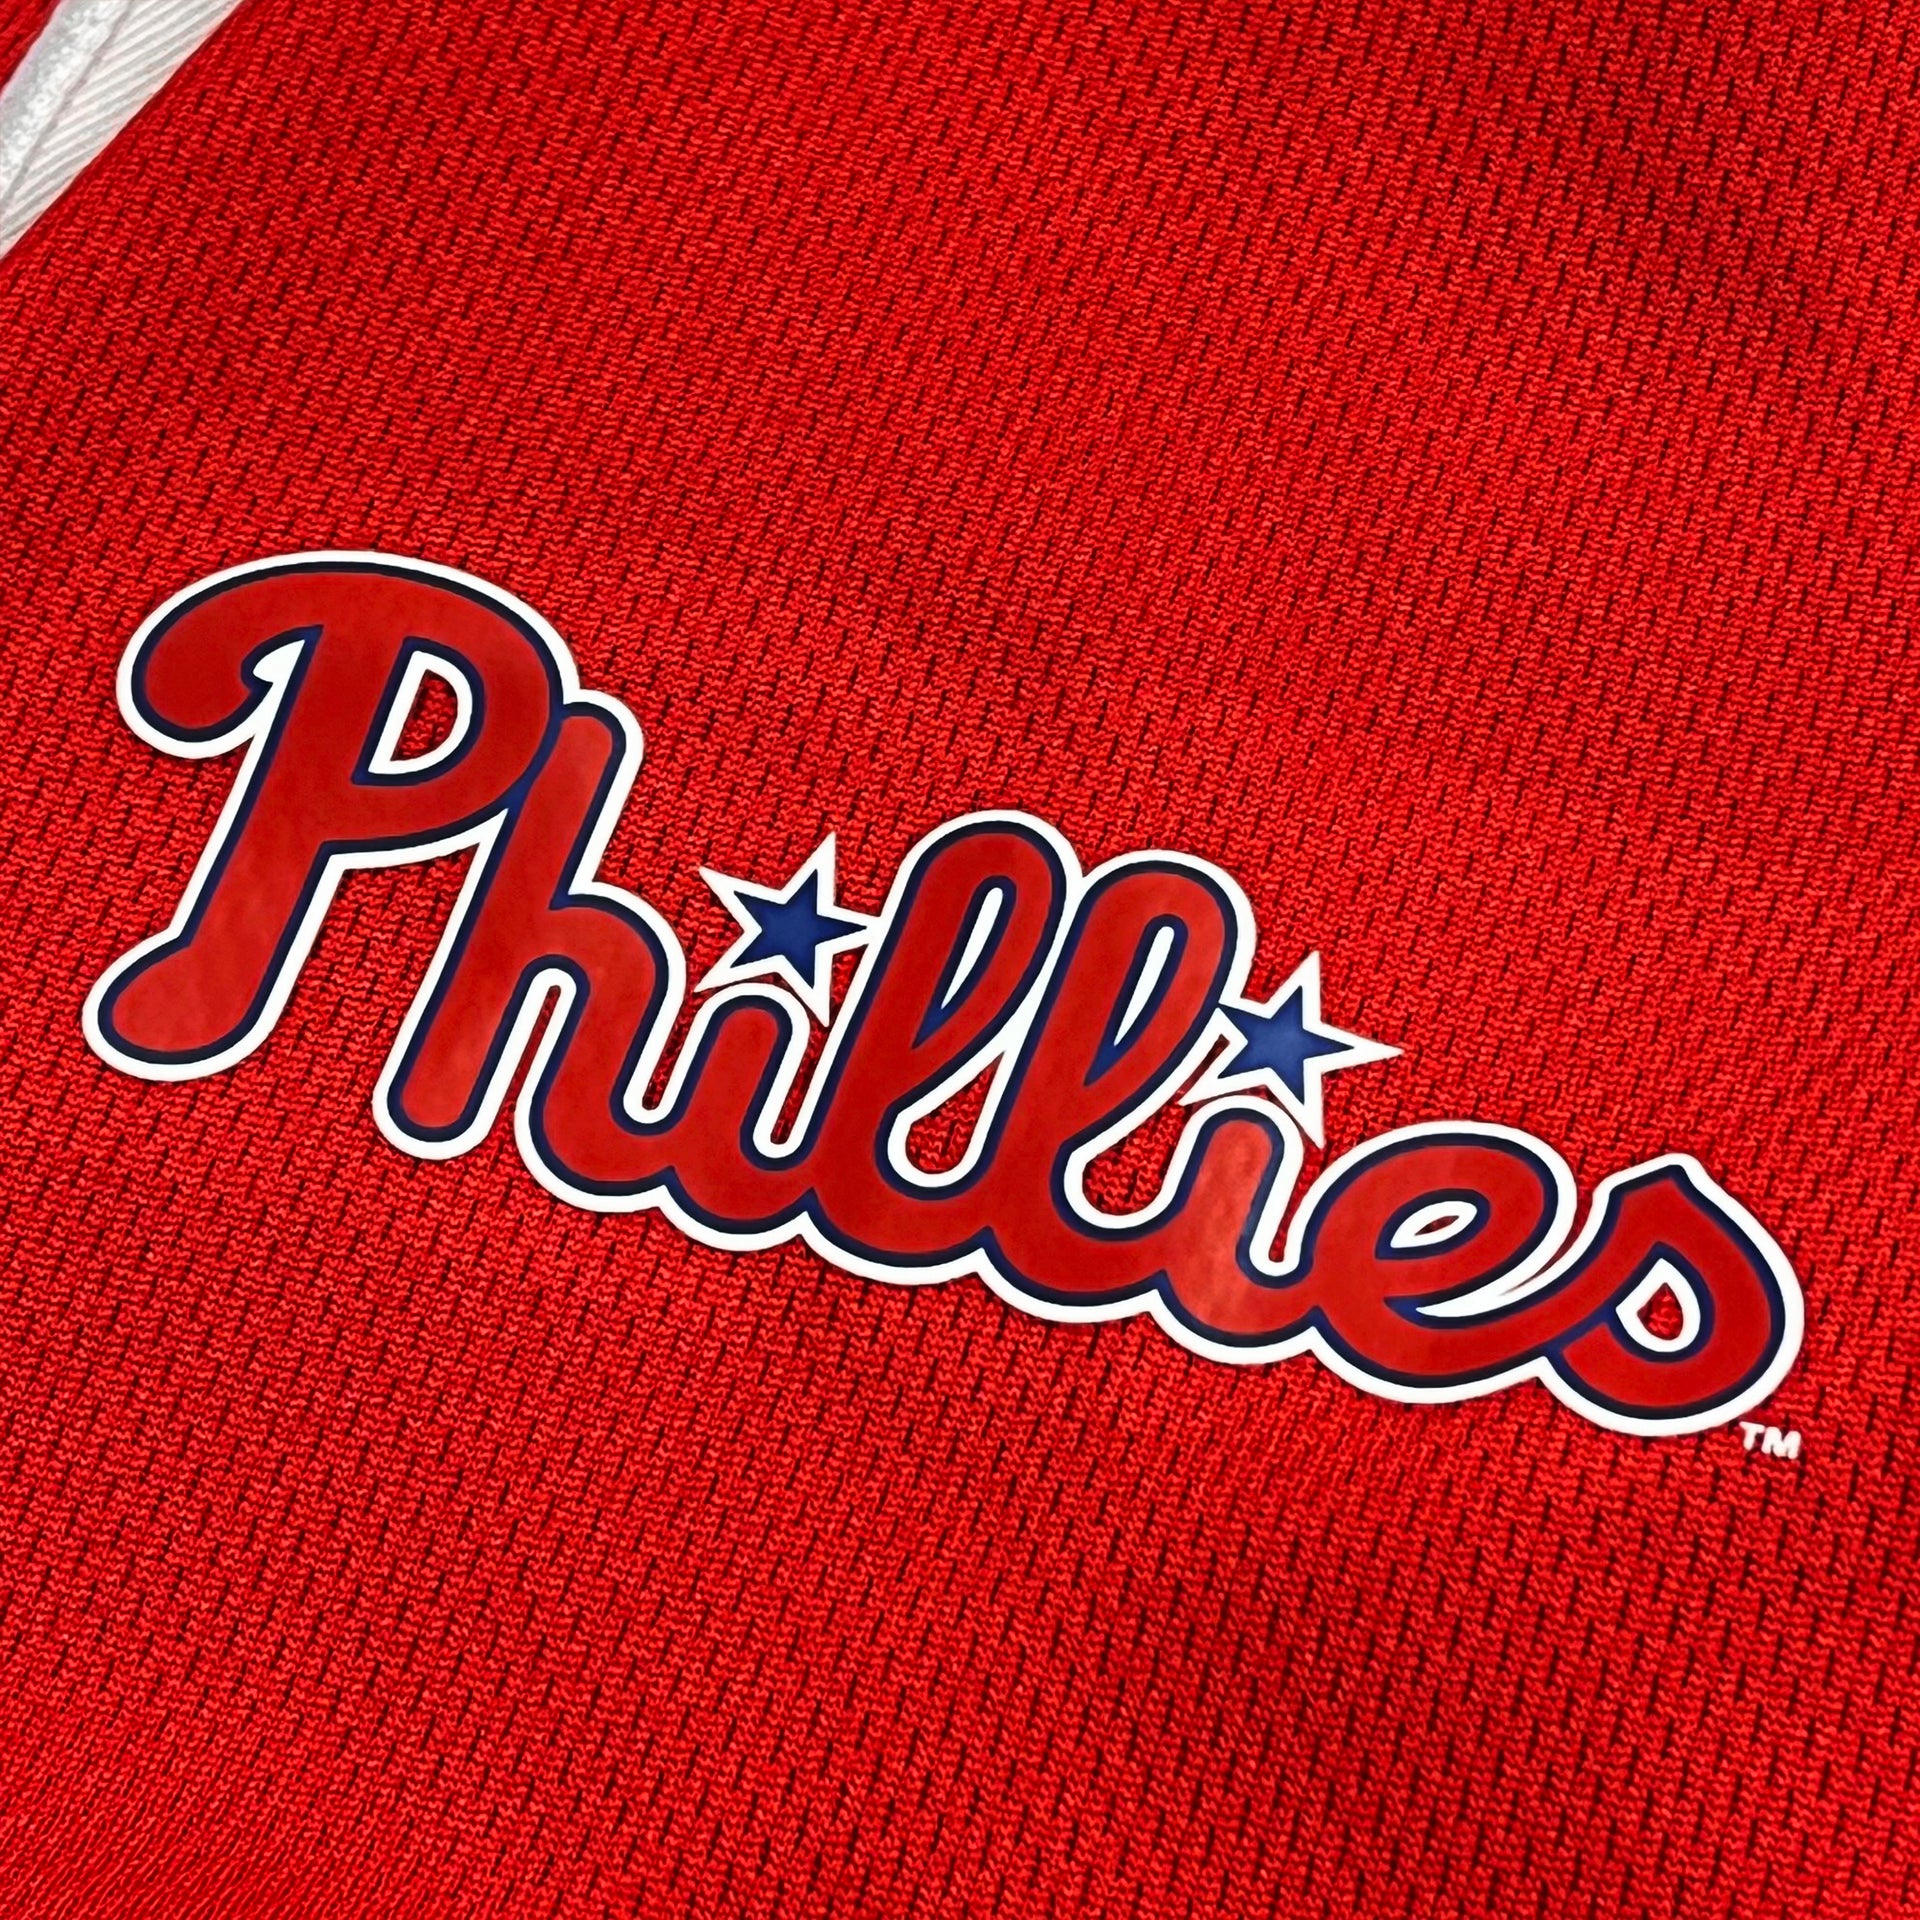 phillies red jerseys